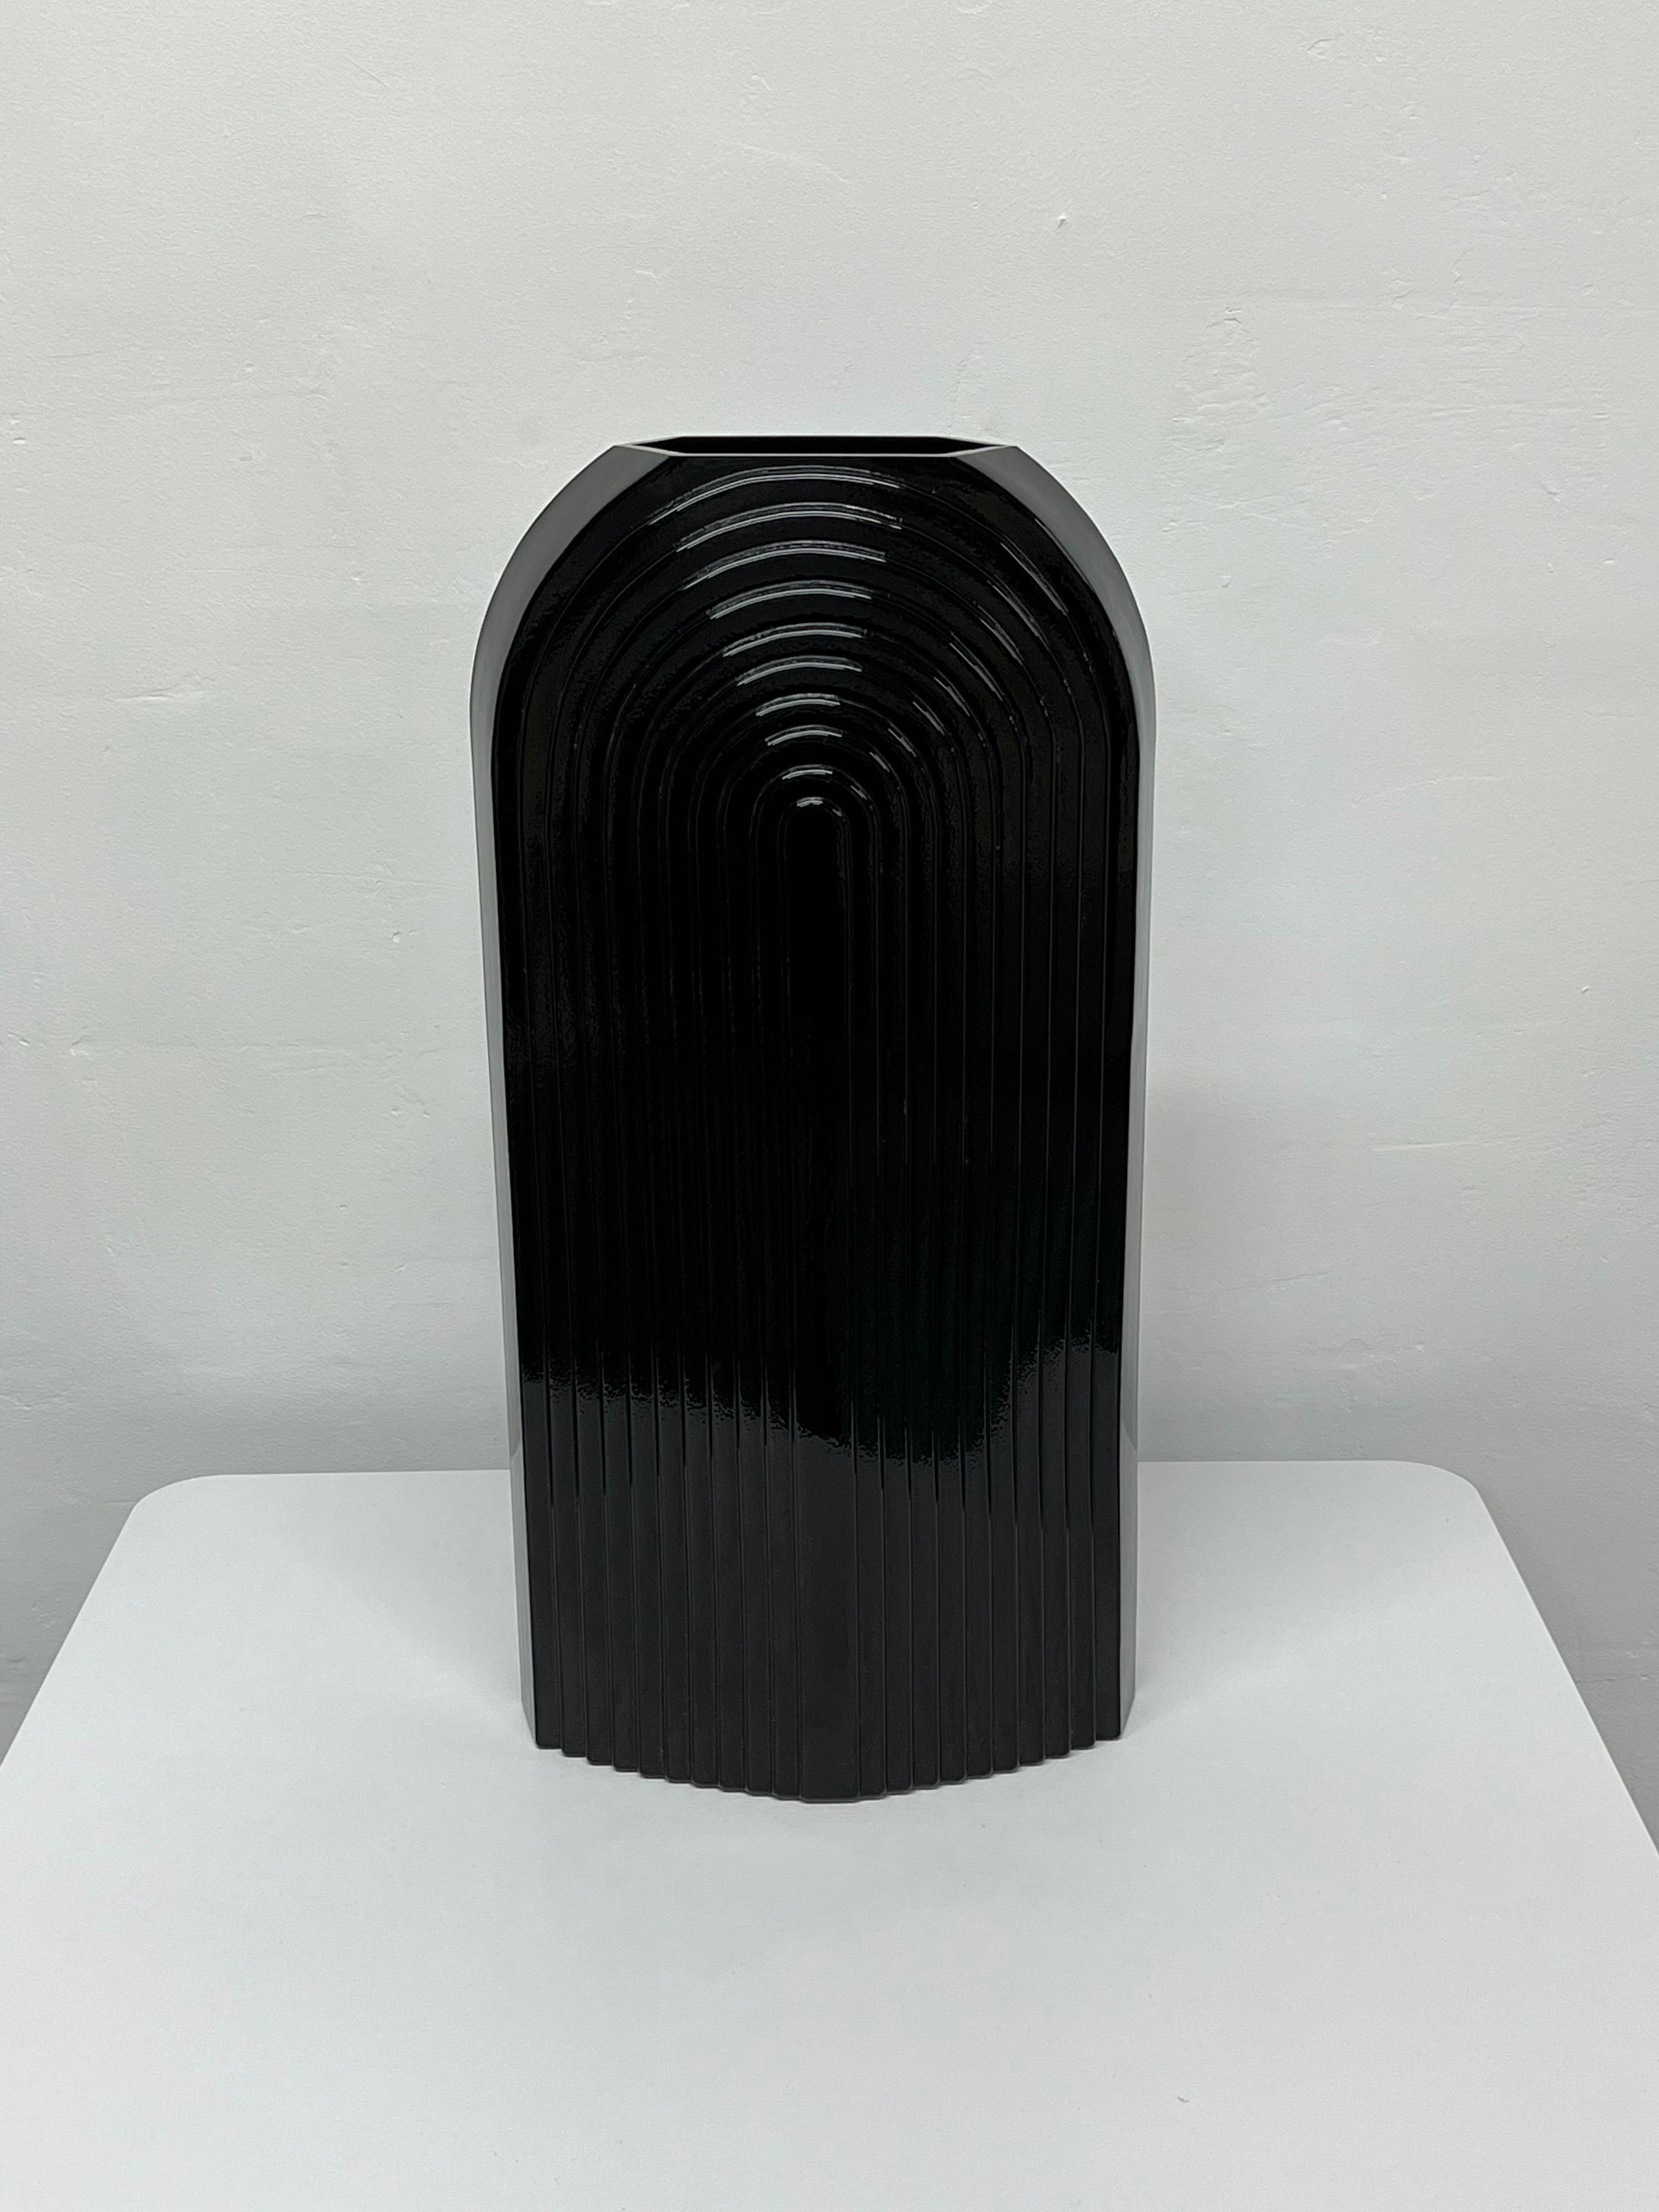 1980s Art Deco Revival fluted black ceramic vase.